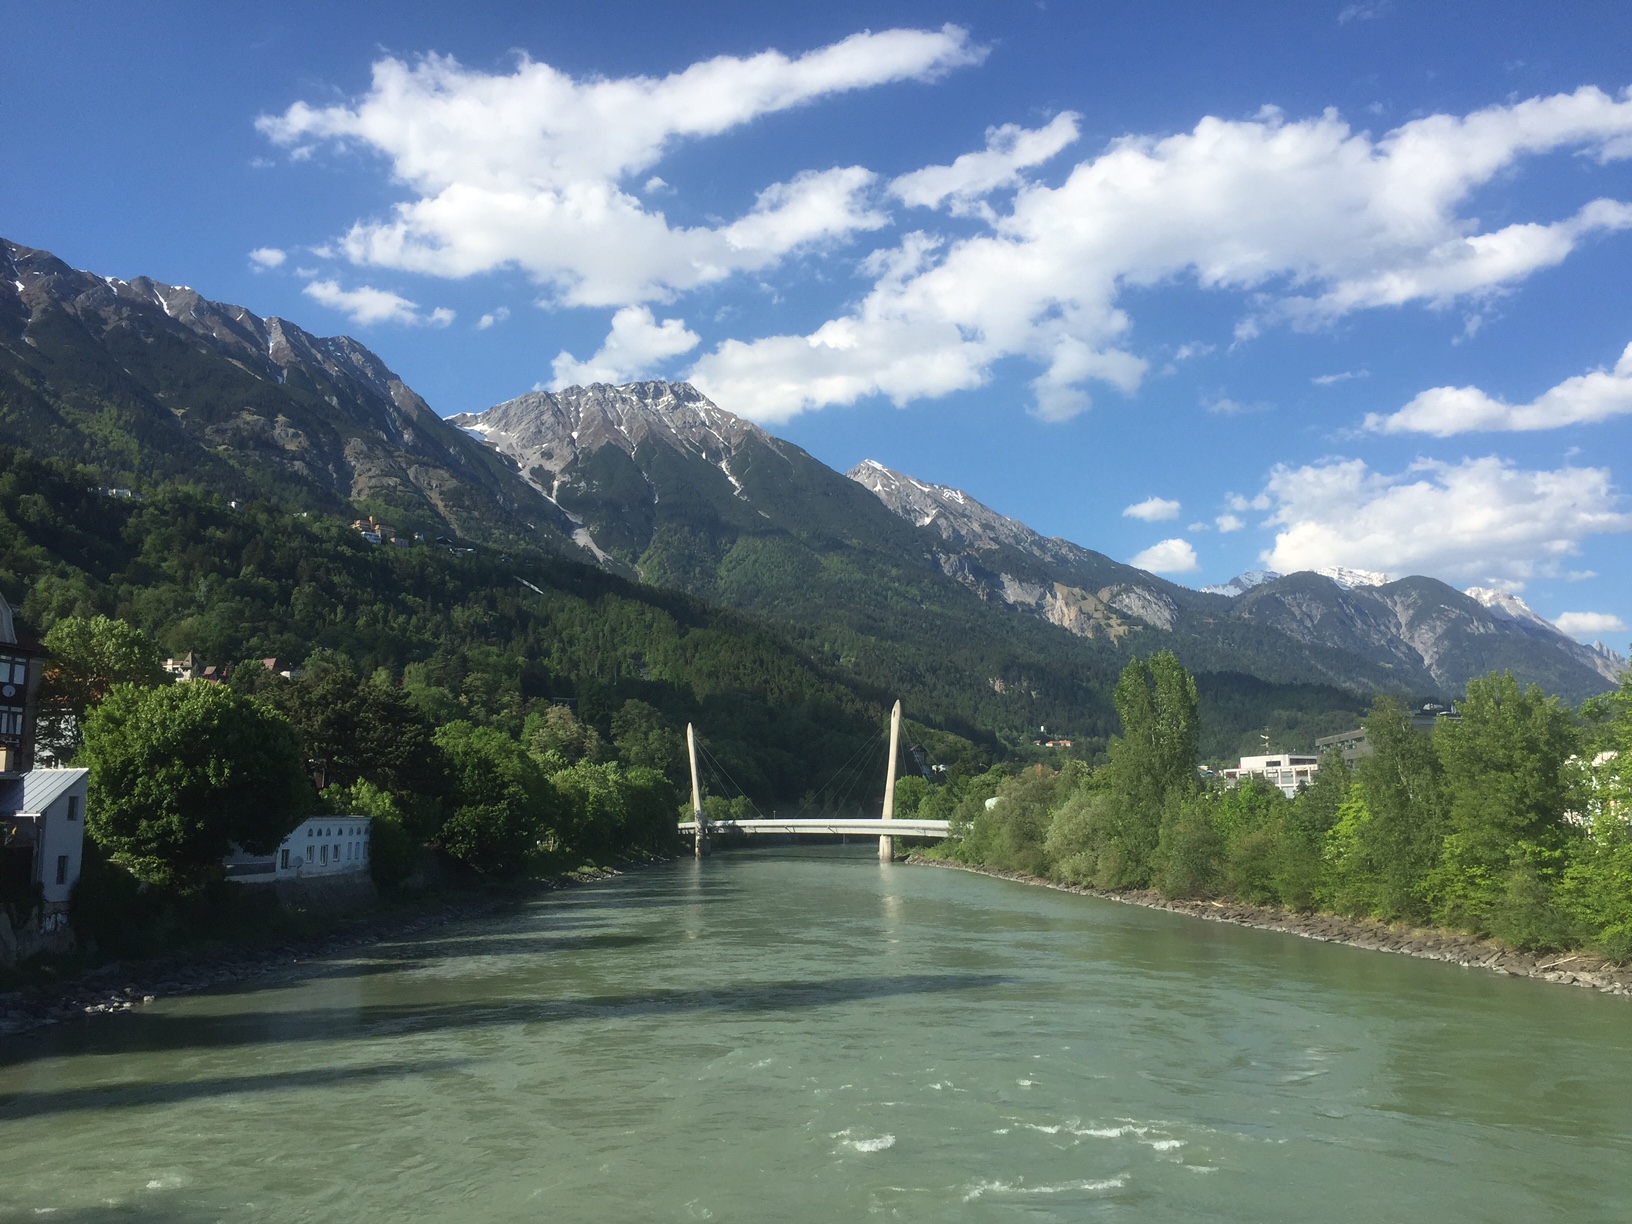 Austira: The River Inn in Innsbruck…a tributary to the Danube.